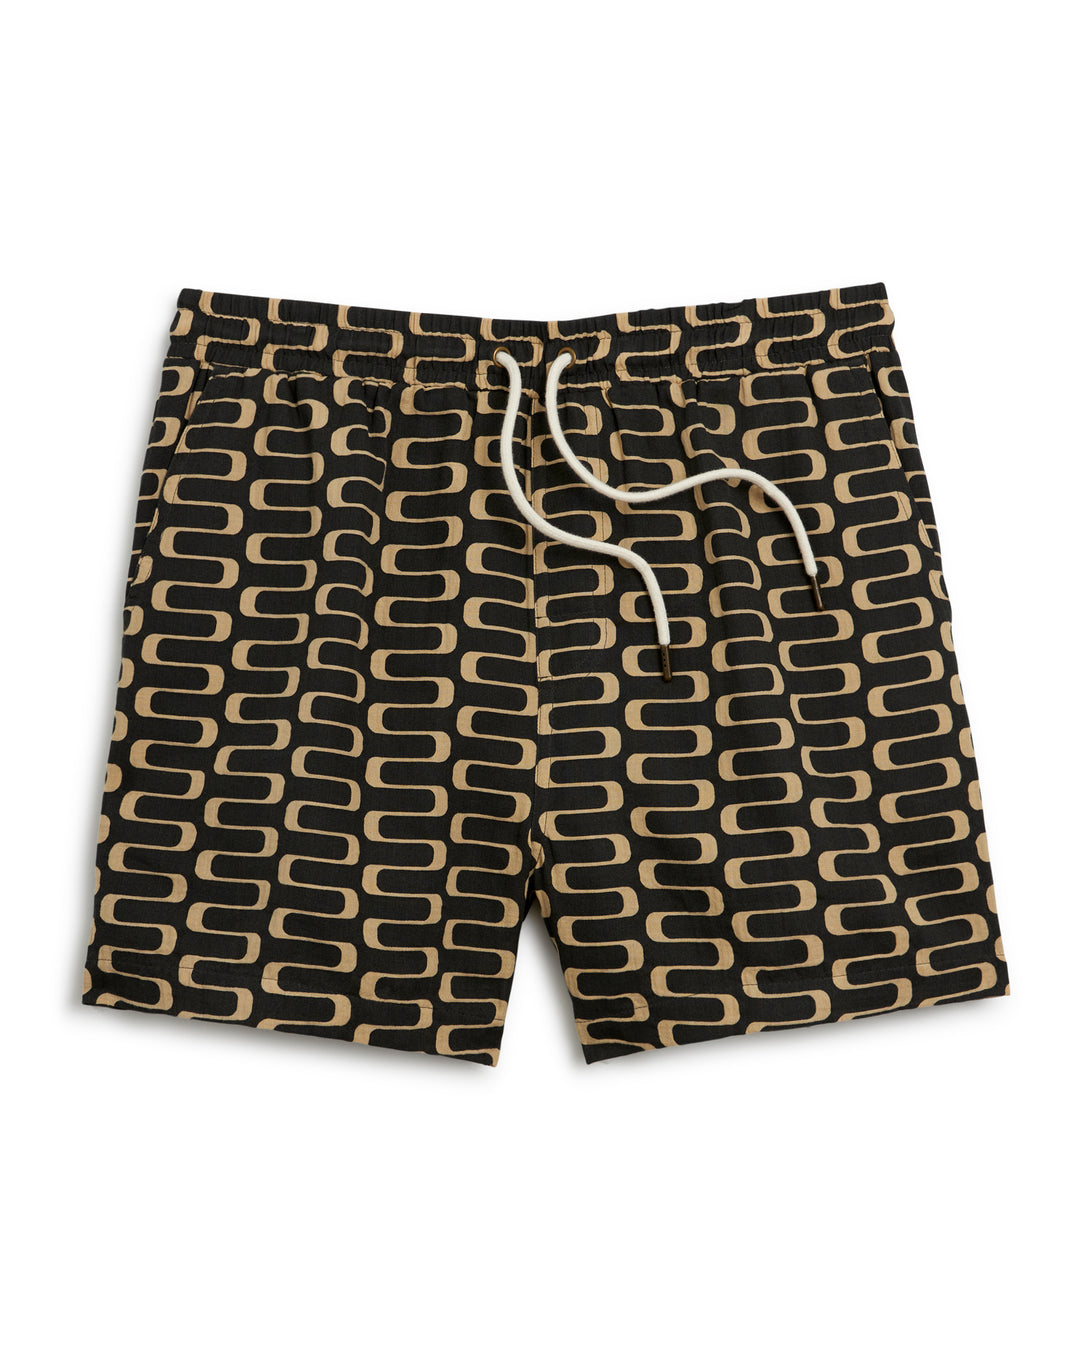 A lightweight Dandy Del Mar Grenadine Short - Truffle men's swim trunks with a black and tan pattern.